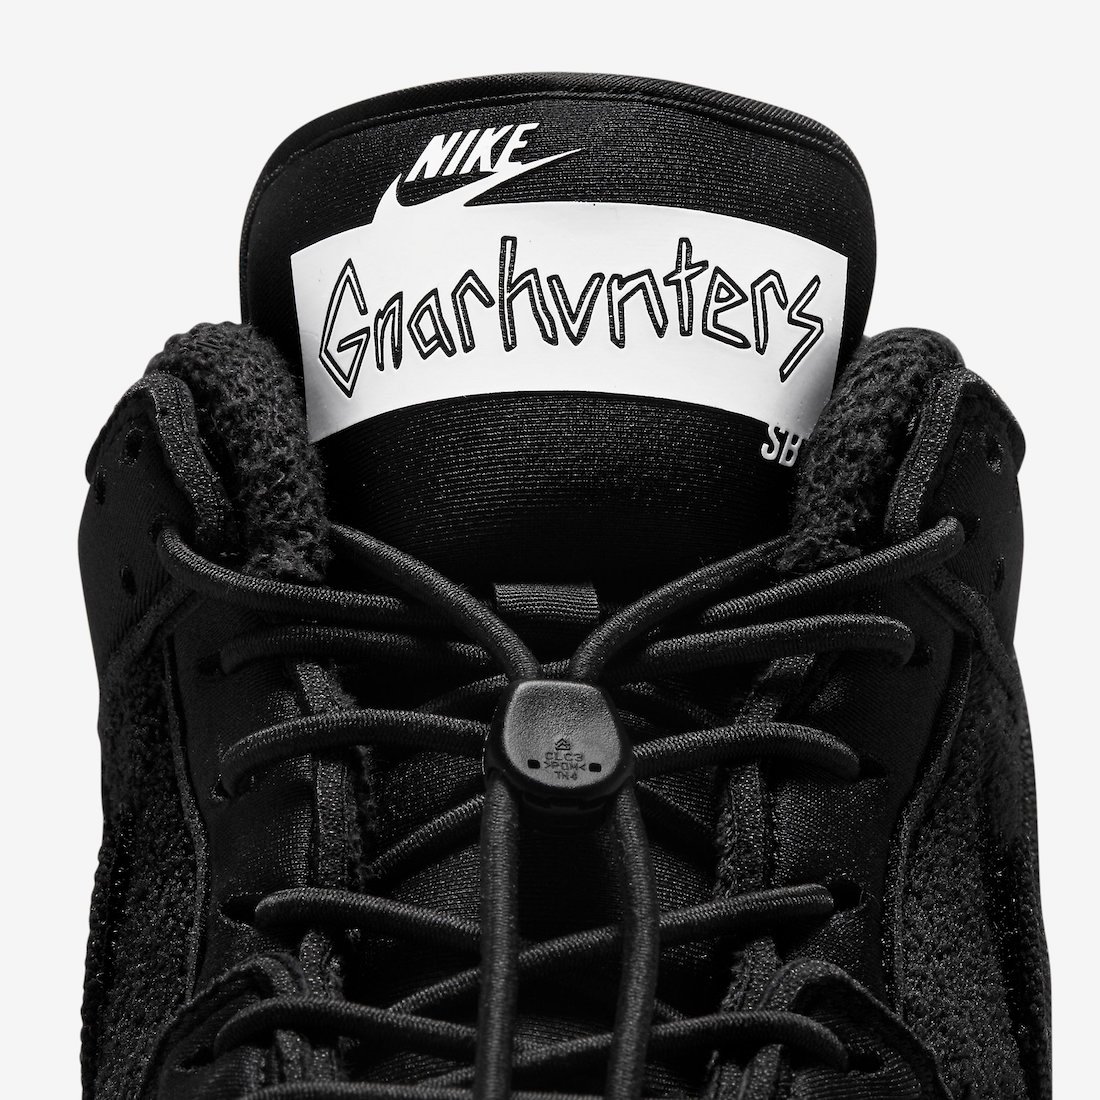 Gnarhunters Nike SB Dunk Low DH7756-010 Release Date